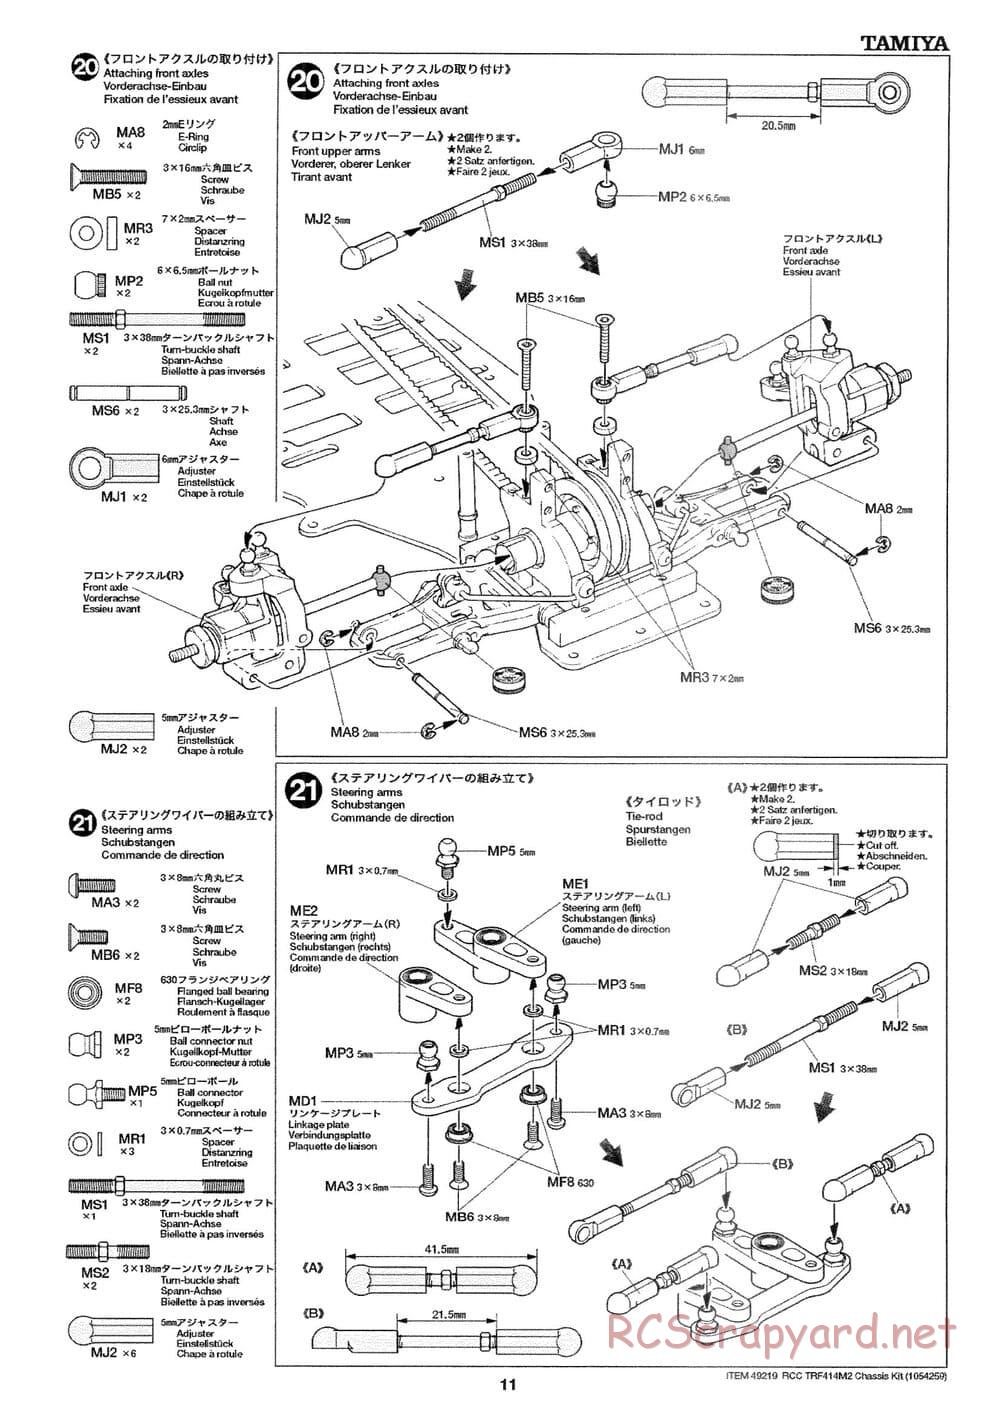 Tamiya - TRF414M II Chassis - Manual - Page 11